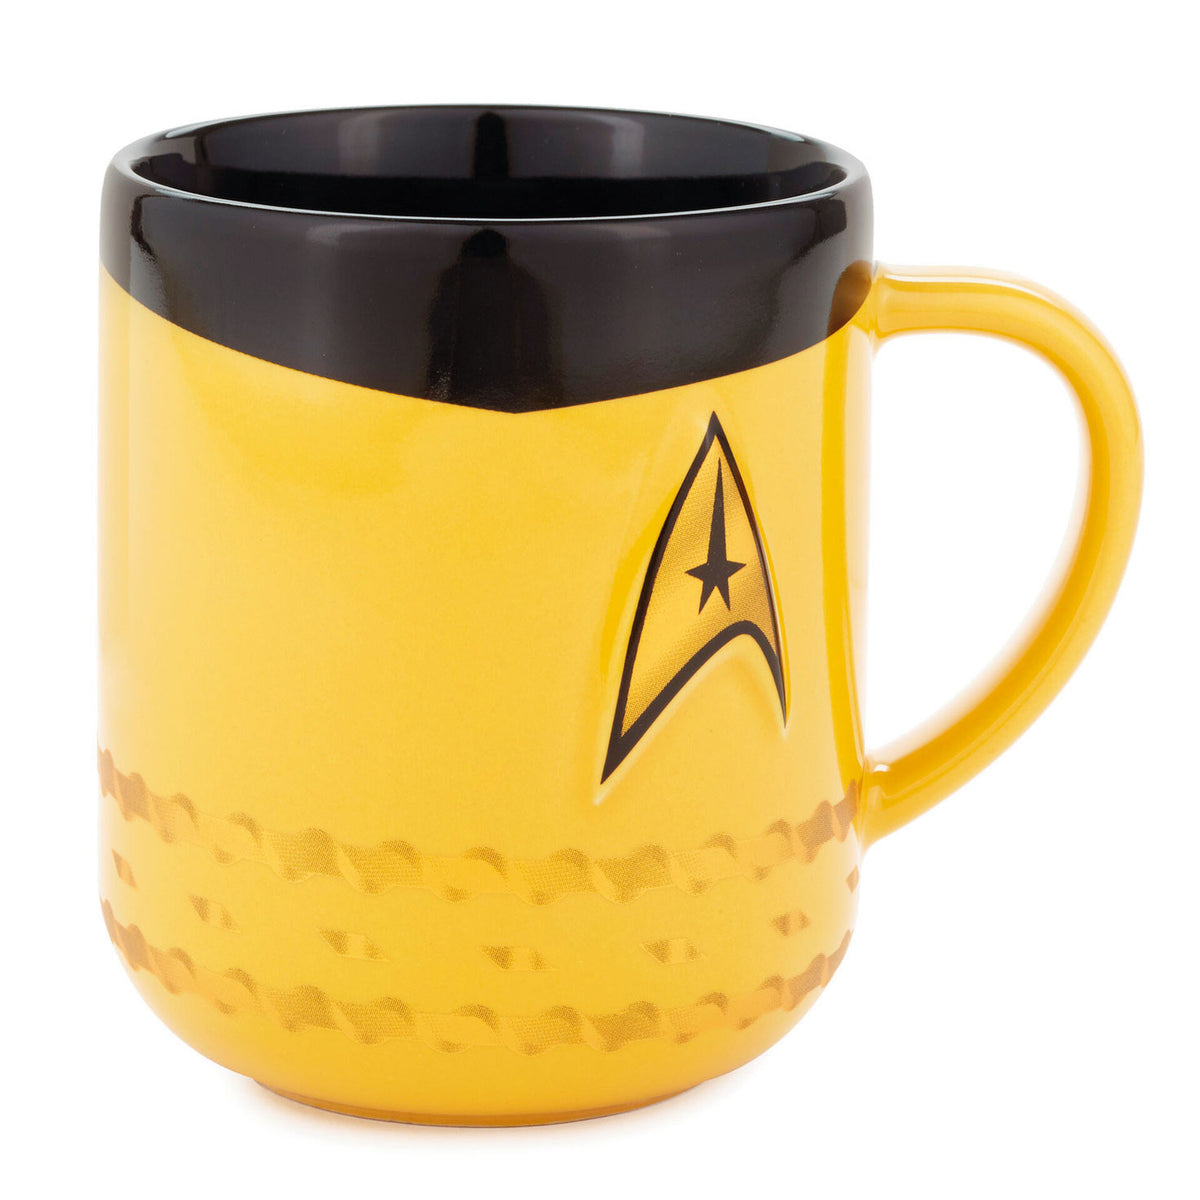 Star Trek: The Next Generation™ Replicator Color-Changing Mug